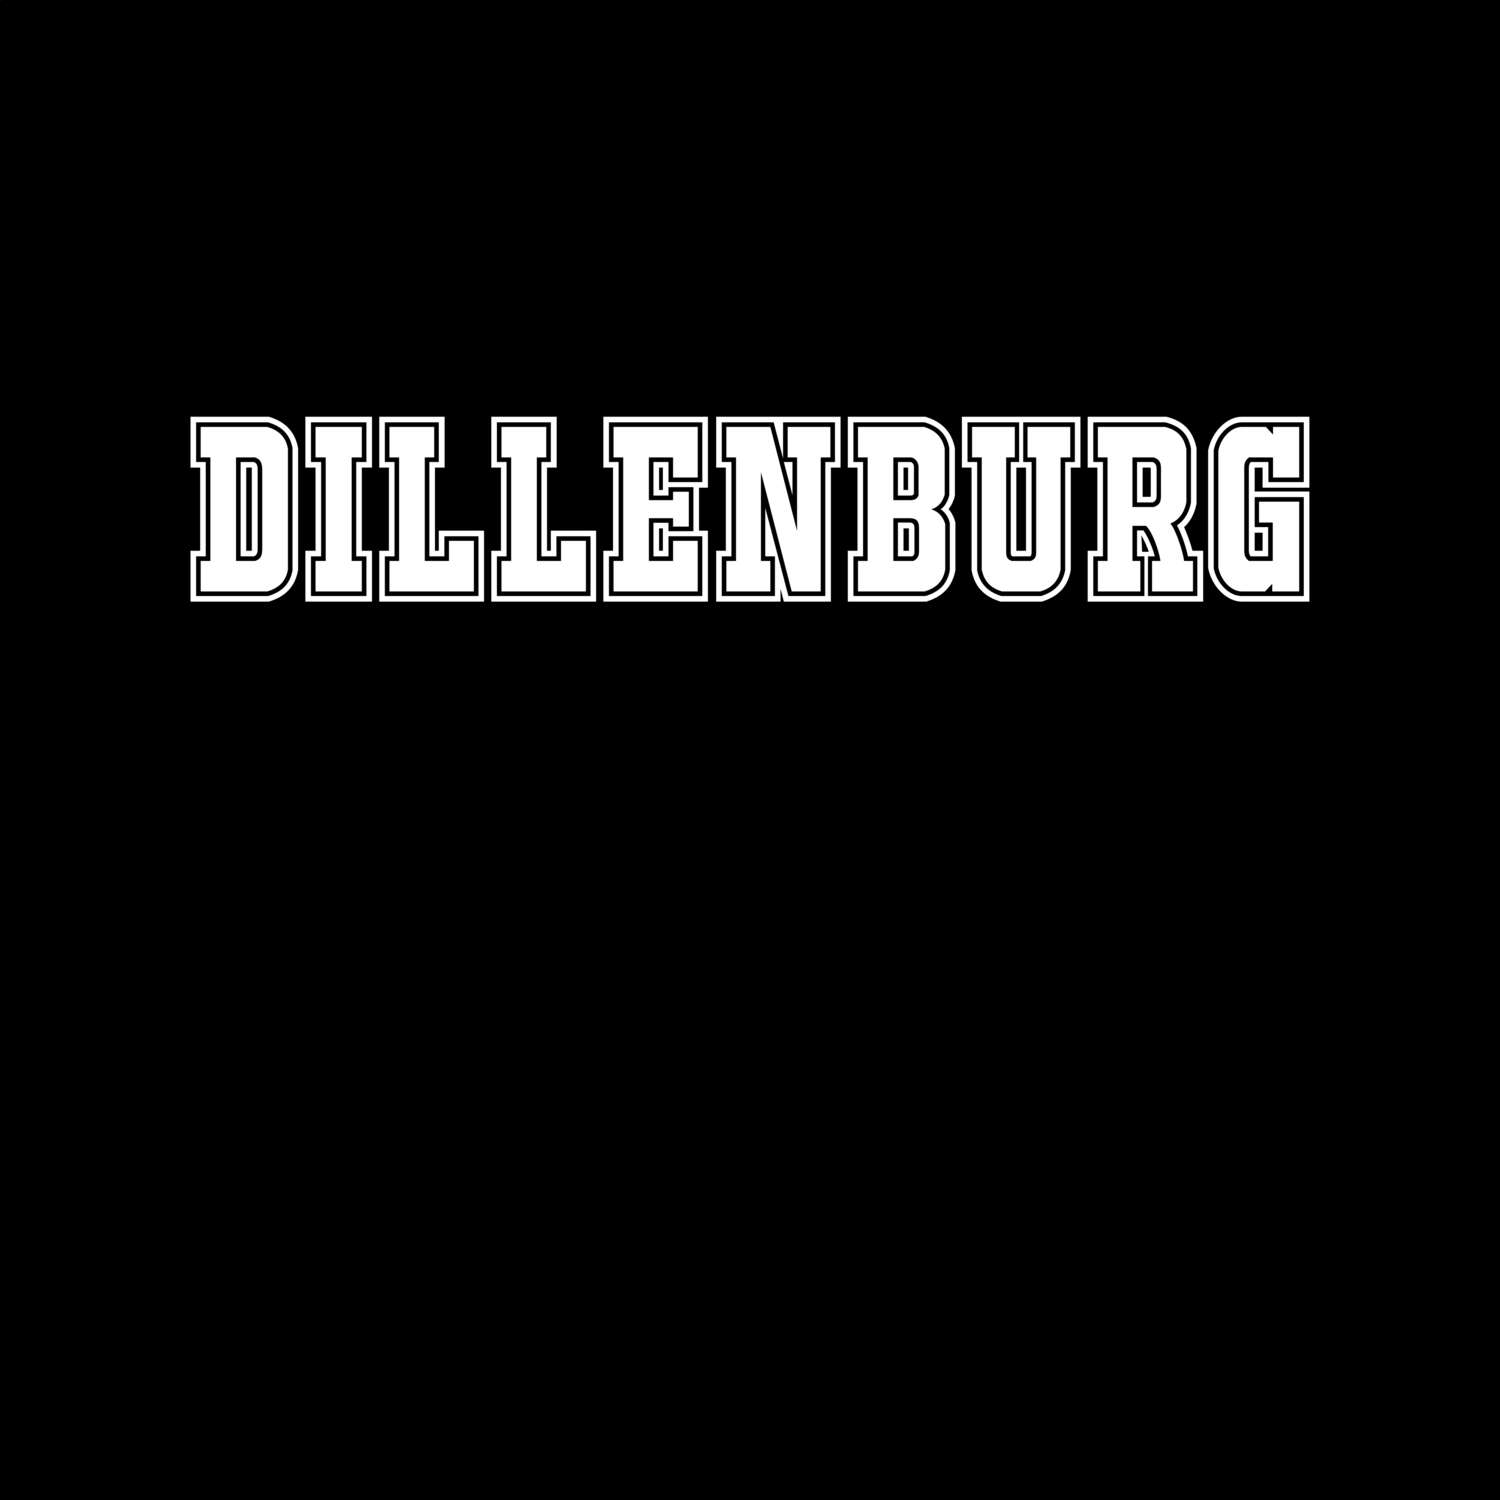 Dillenburg T-Shirt »Classic«